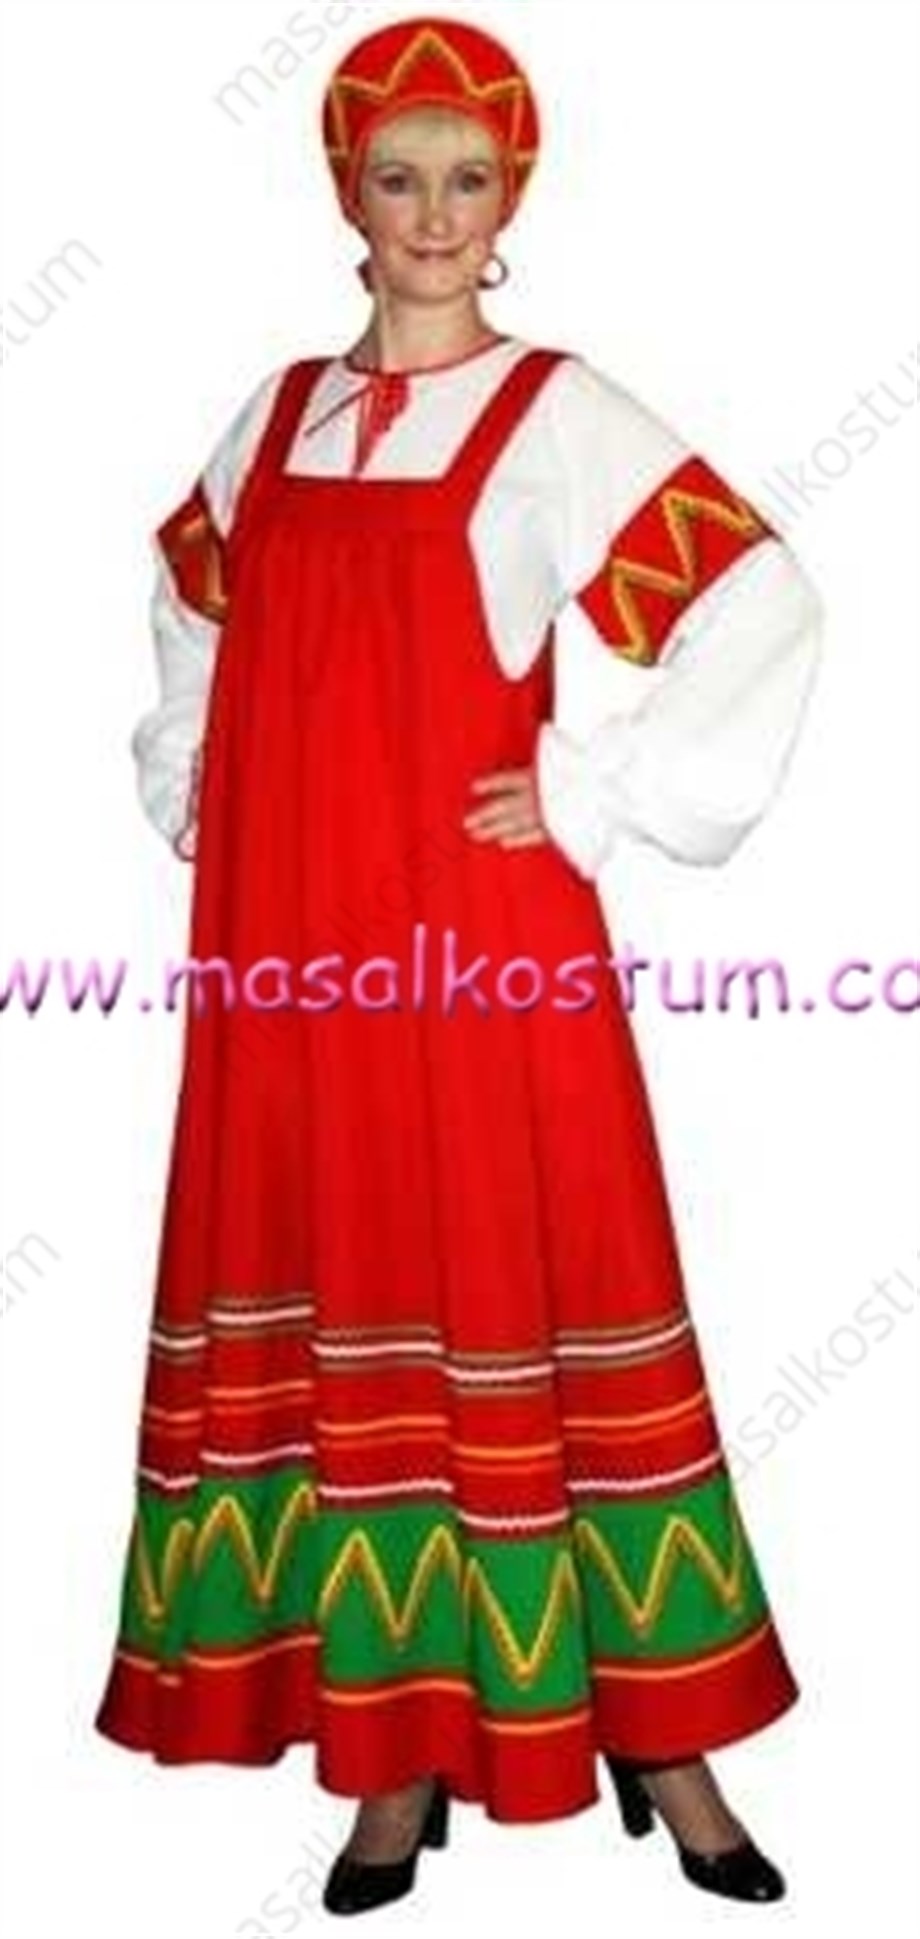 Rus Bayan Kostümü BN-01 | masalkostum.com